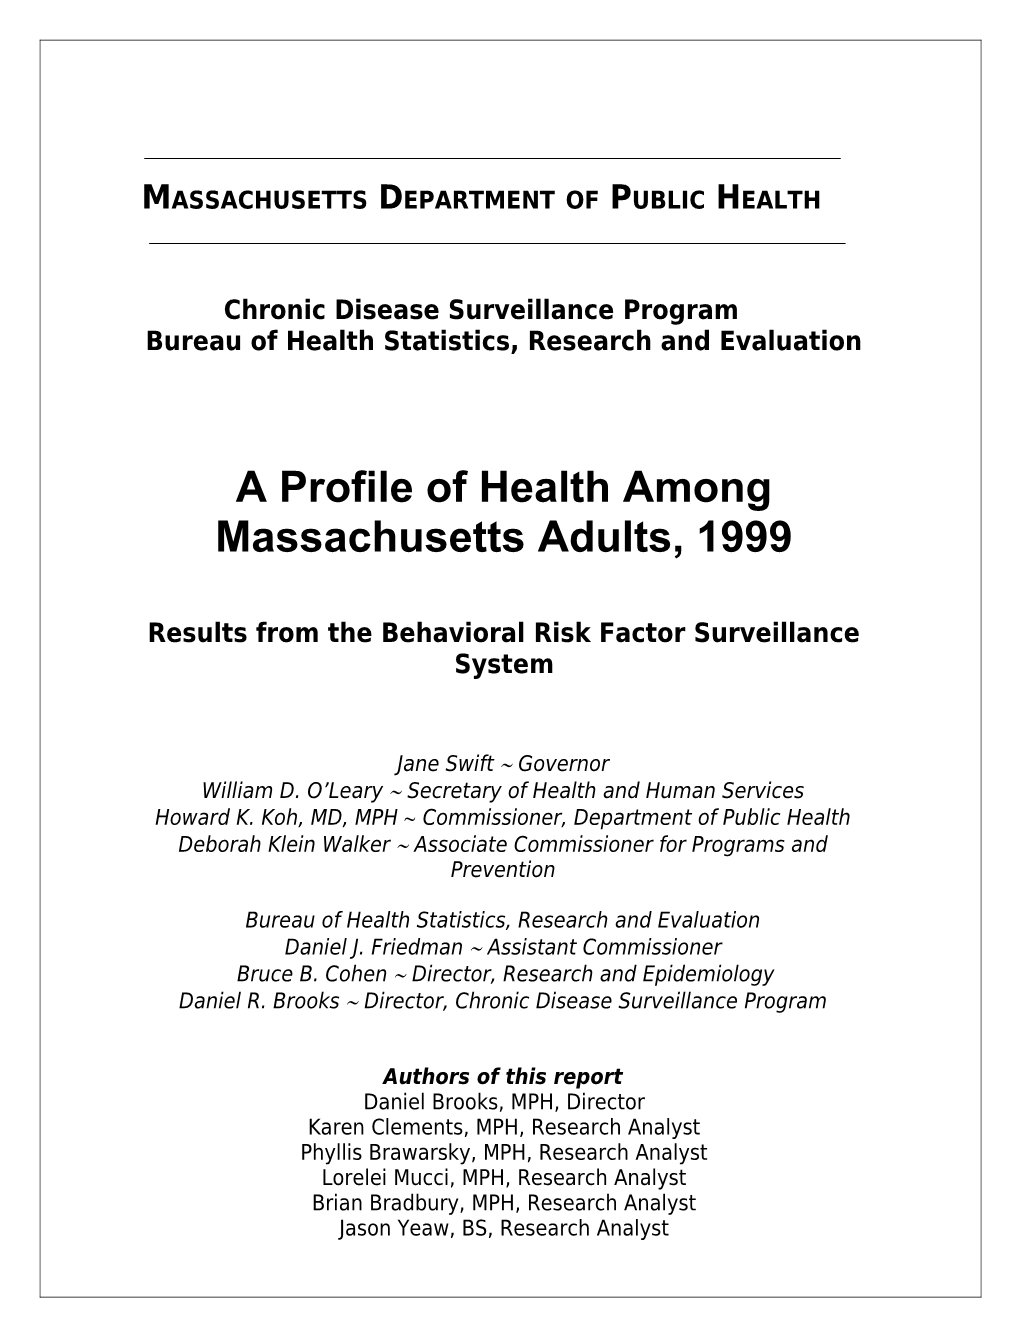 Massachusetts Department of Public Health s3